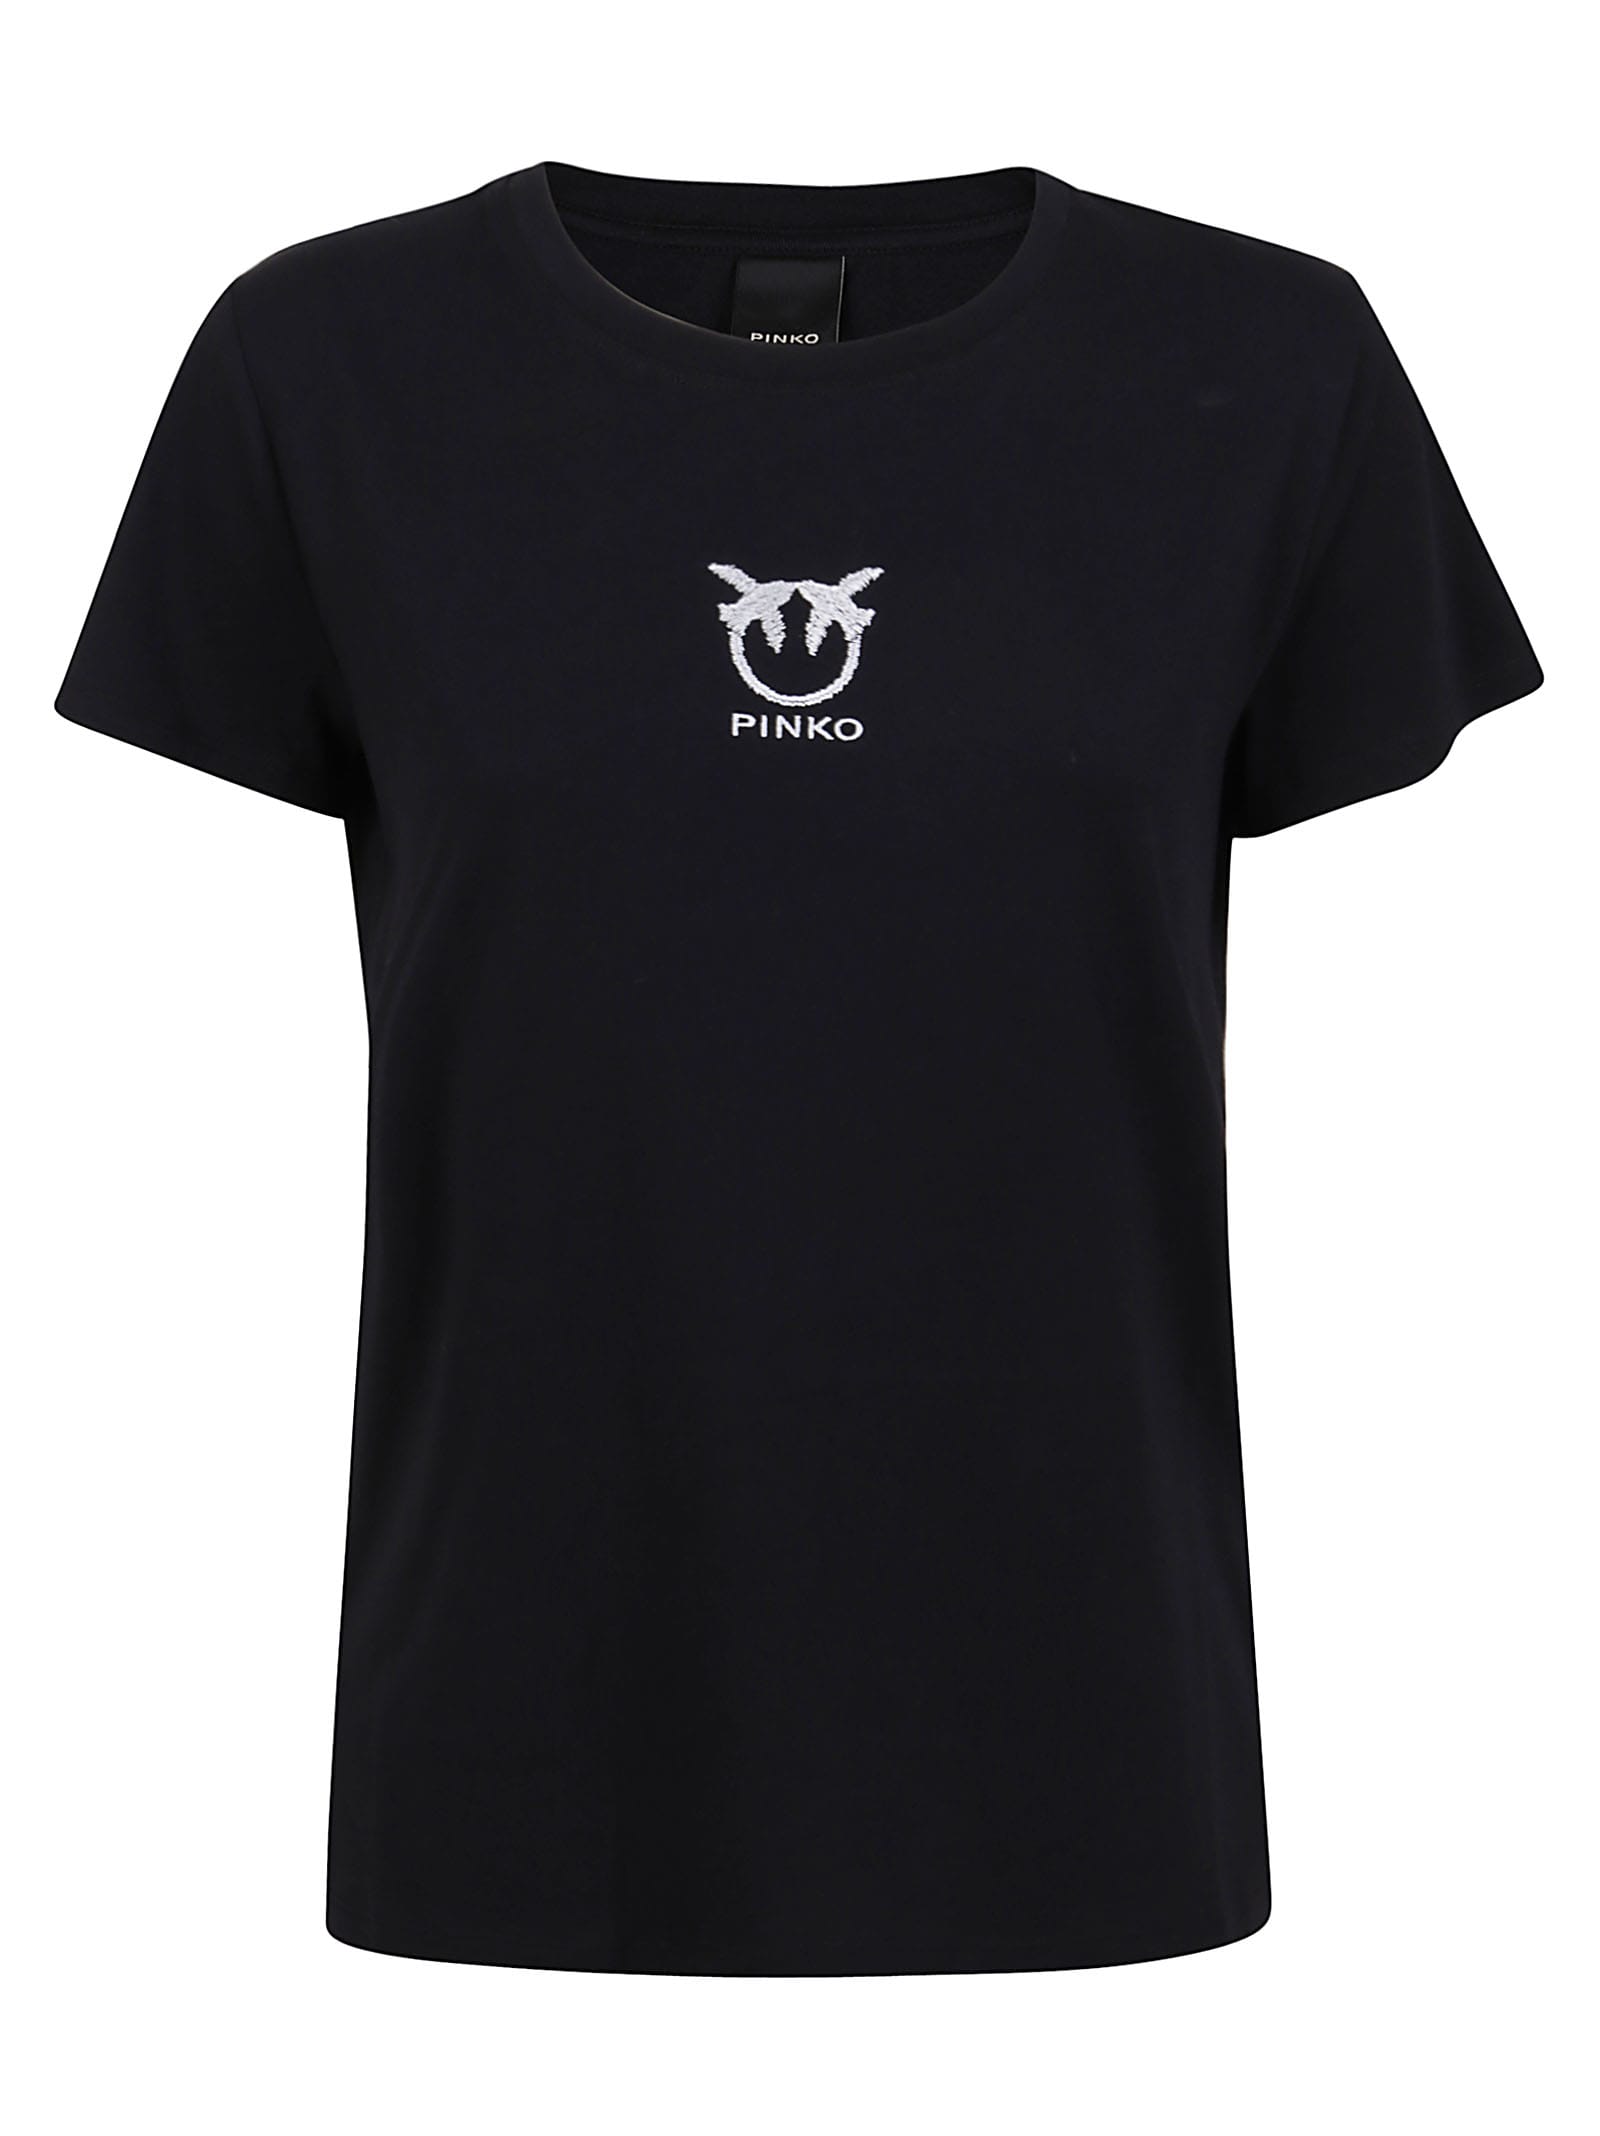 Pinko Black Cotton T-shirt